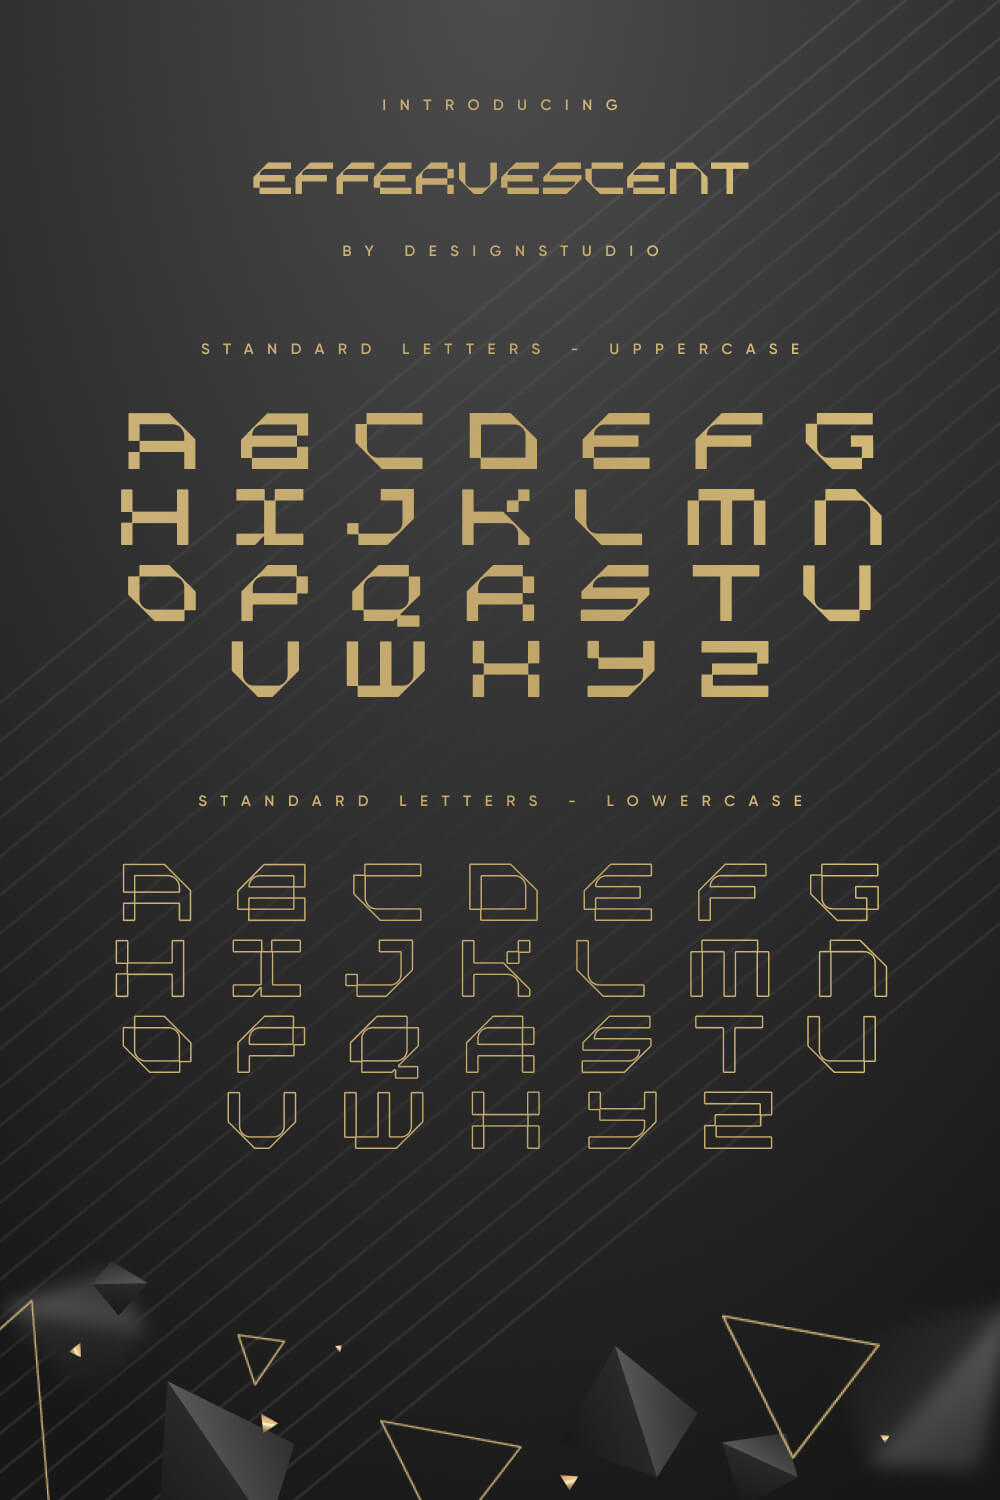 Effervescent Serif Monospaced Font pinterest image.